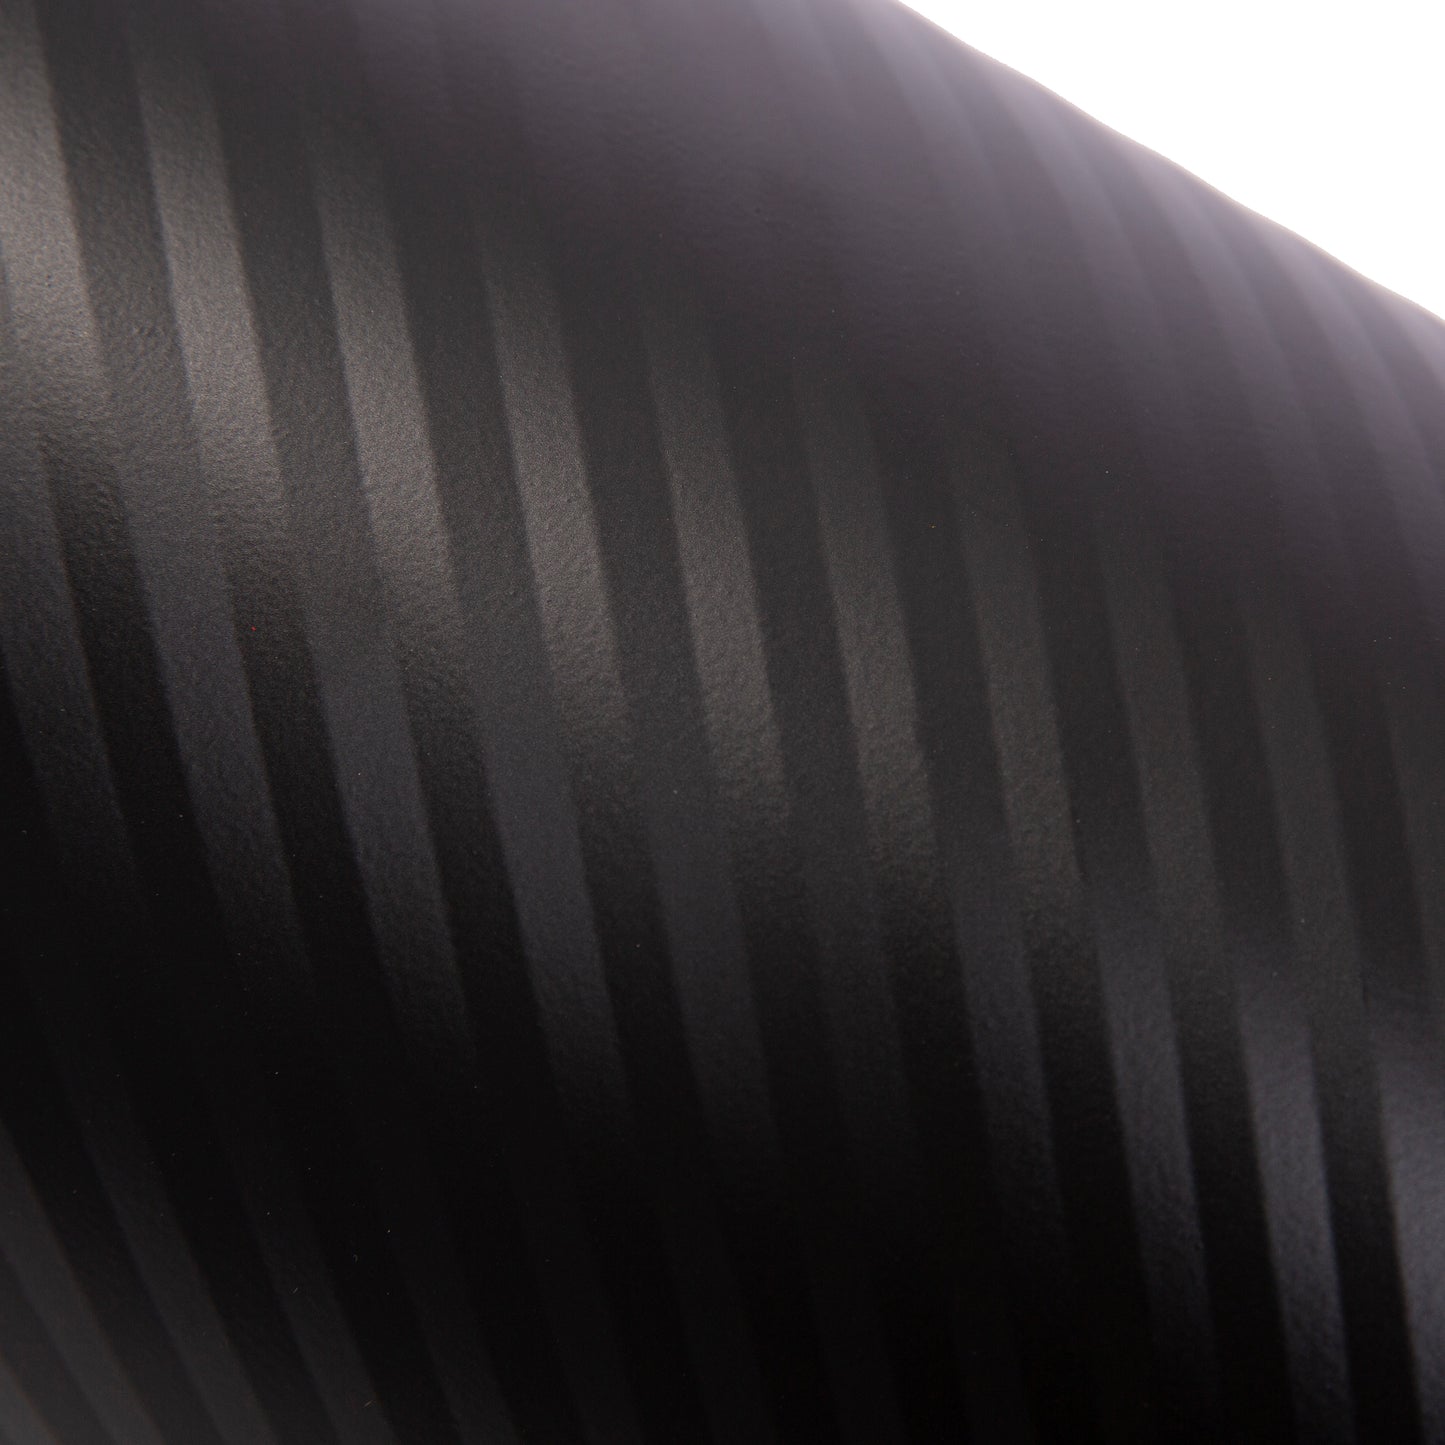 Metal Open Trash Bin - Matte Black Stripe Textured